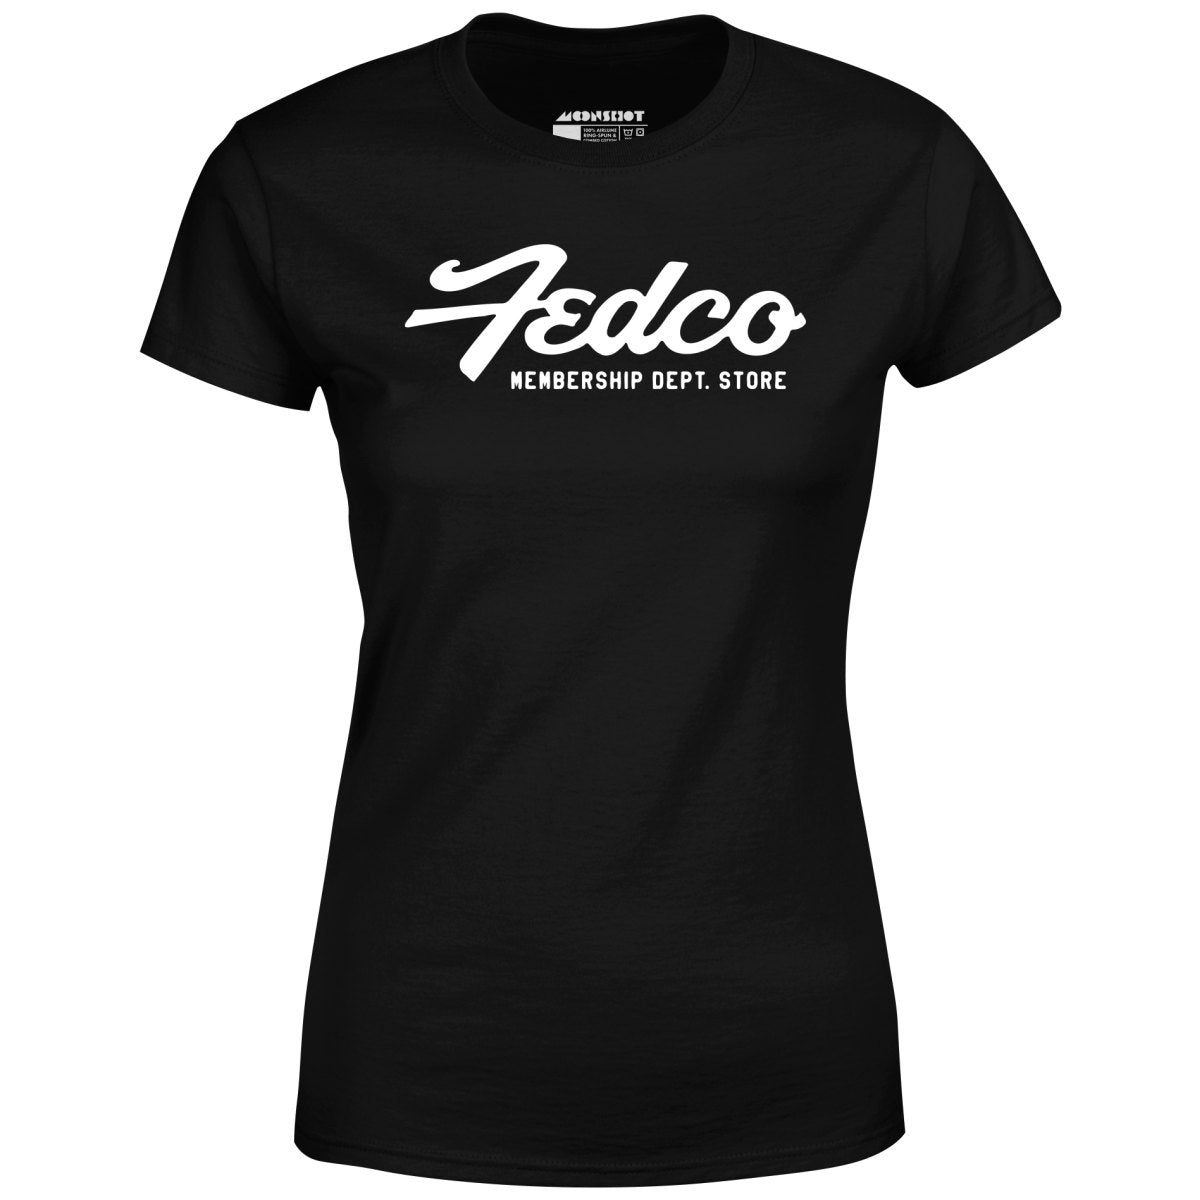 Fedco - Vintage Department Store - Women's T-Shirt